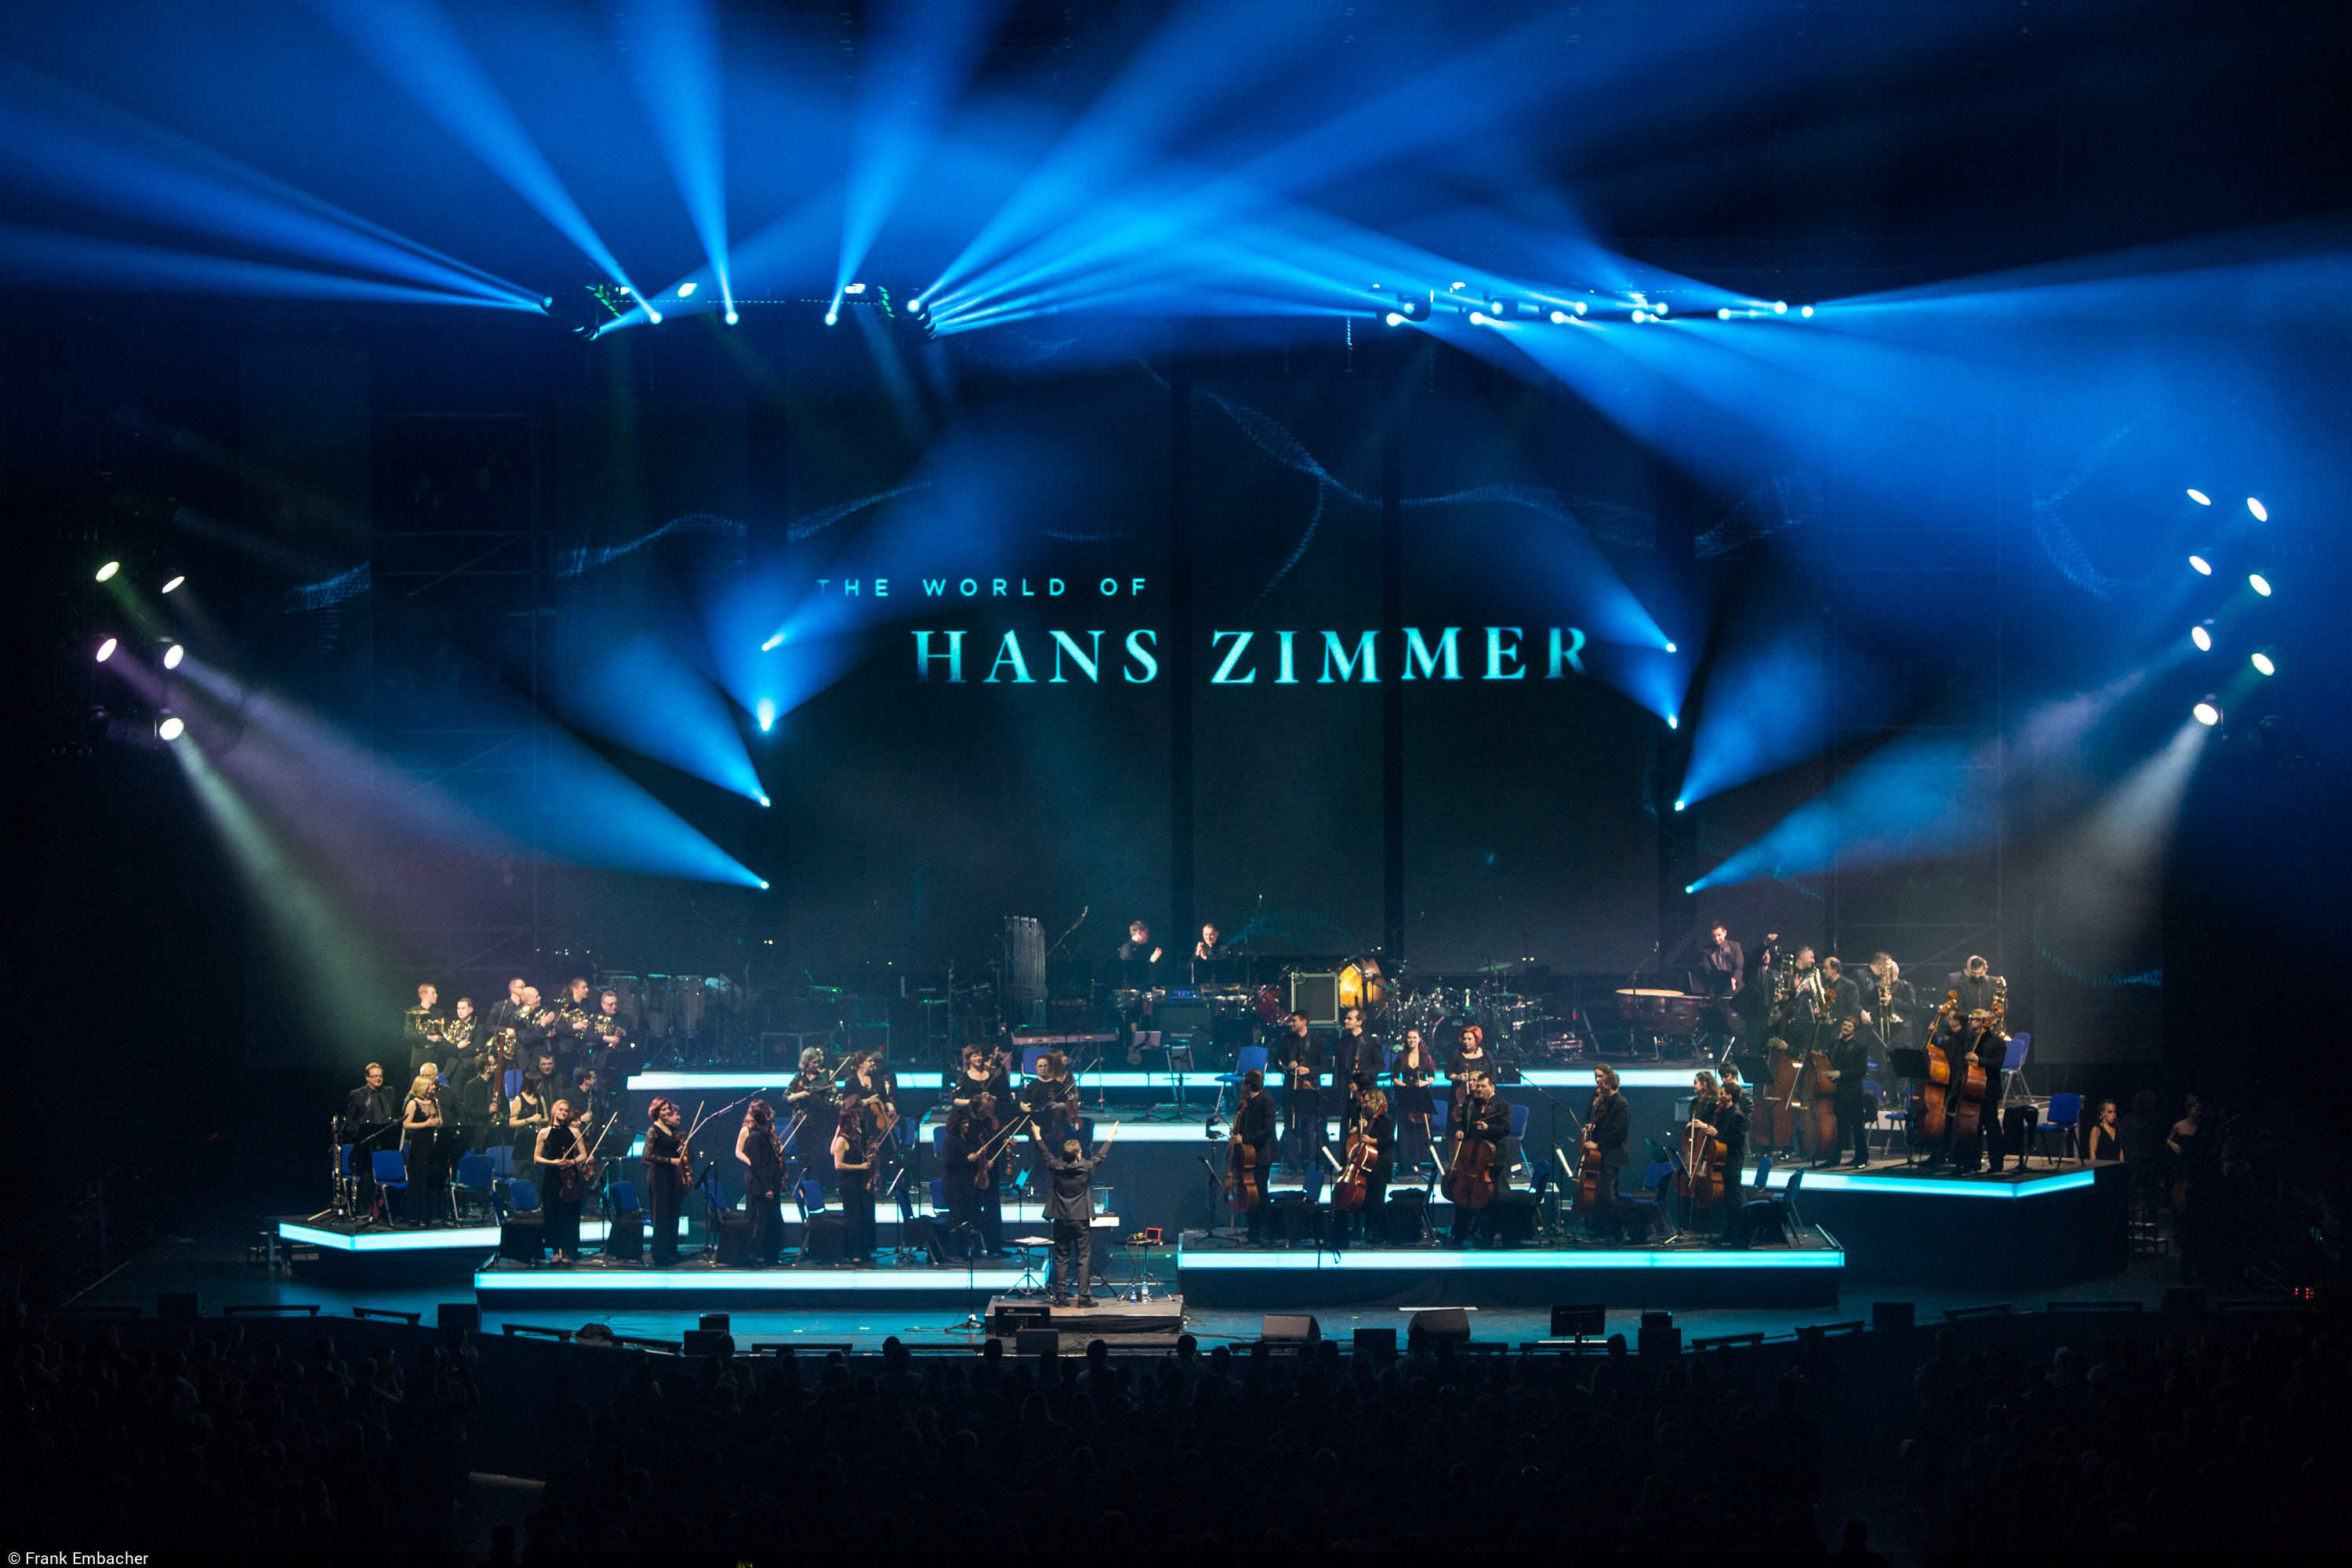 Hans zimmer orchestra. Hanz концерт Hans Zimmer. Концерт Ханса ЦИМЕРМАНА. Ханс Циммер концерт в Москве. Hans Zimmer’s Universe концерт.